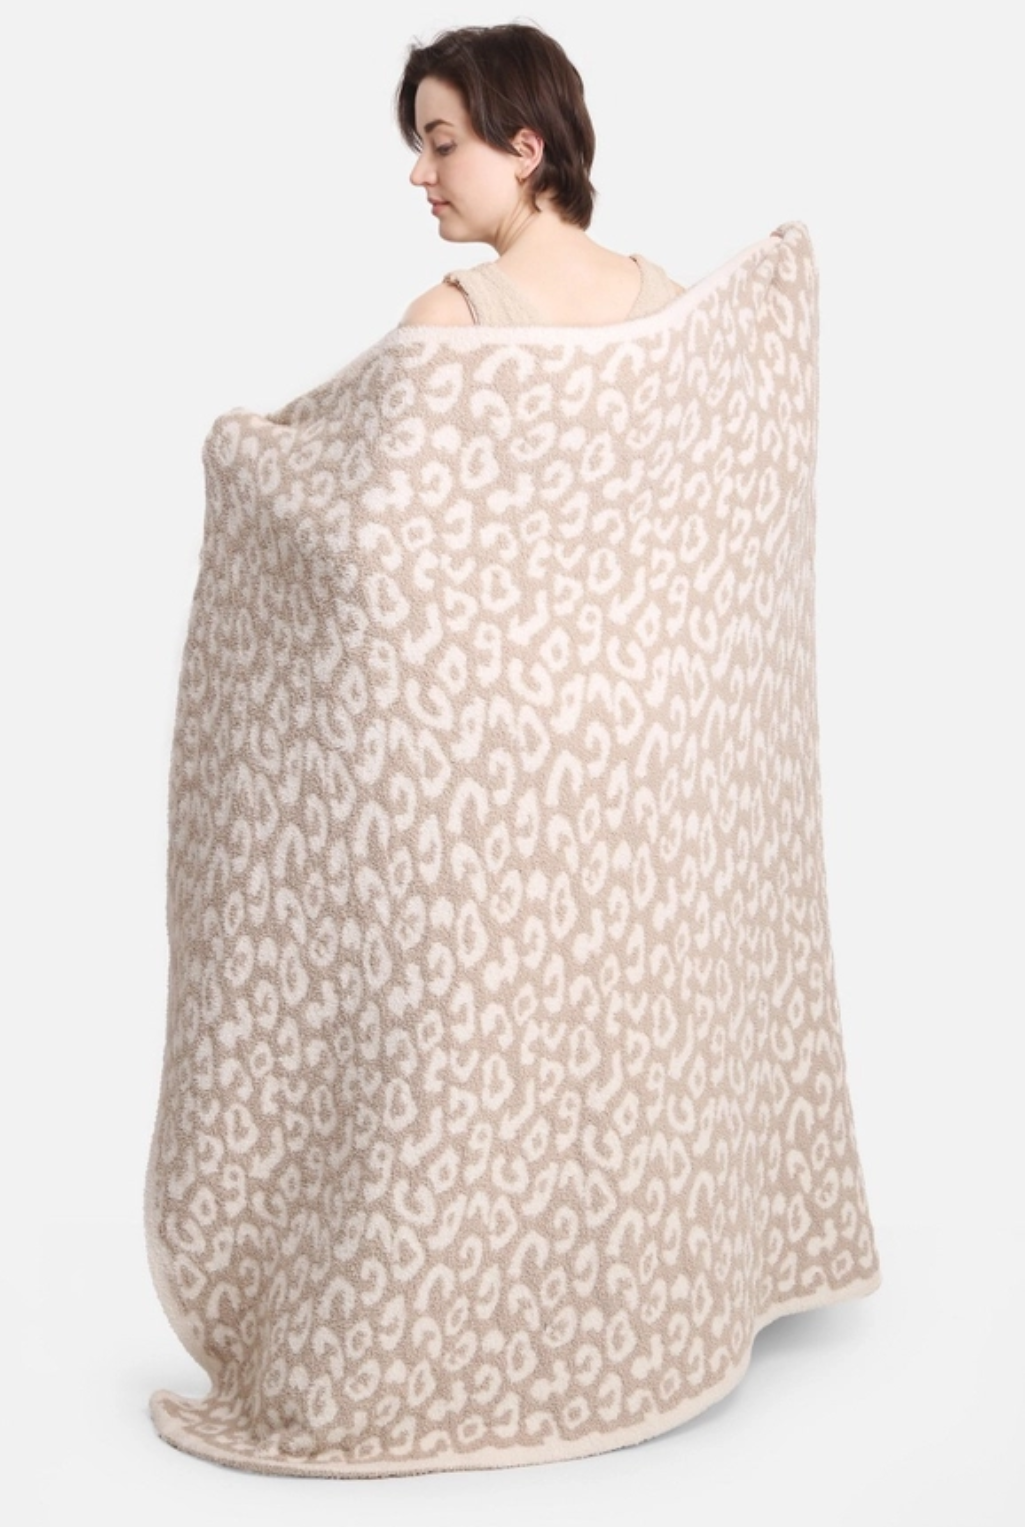 Leopard Blanket - Beige